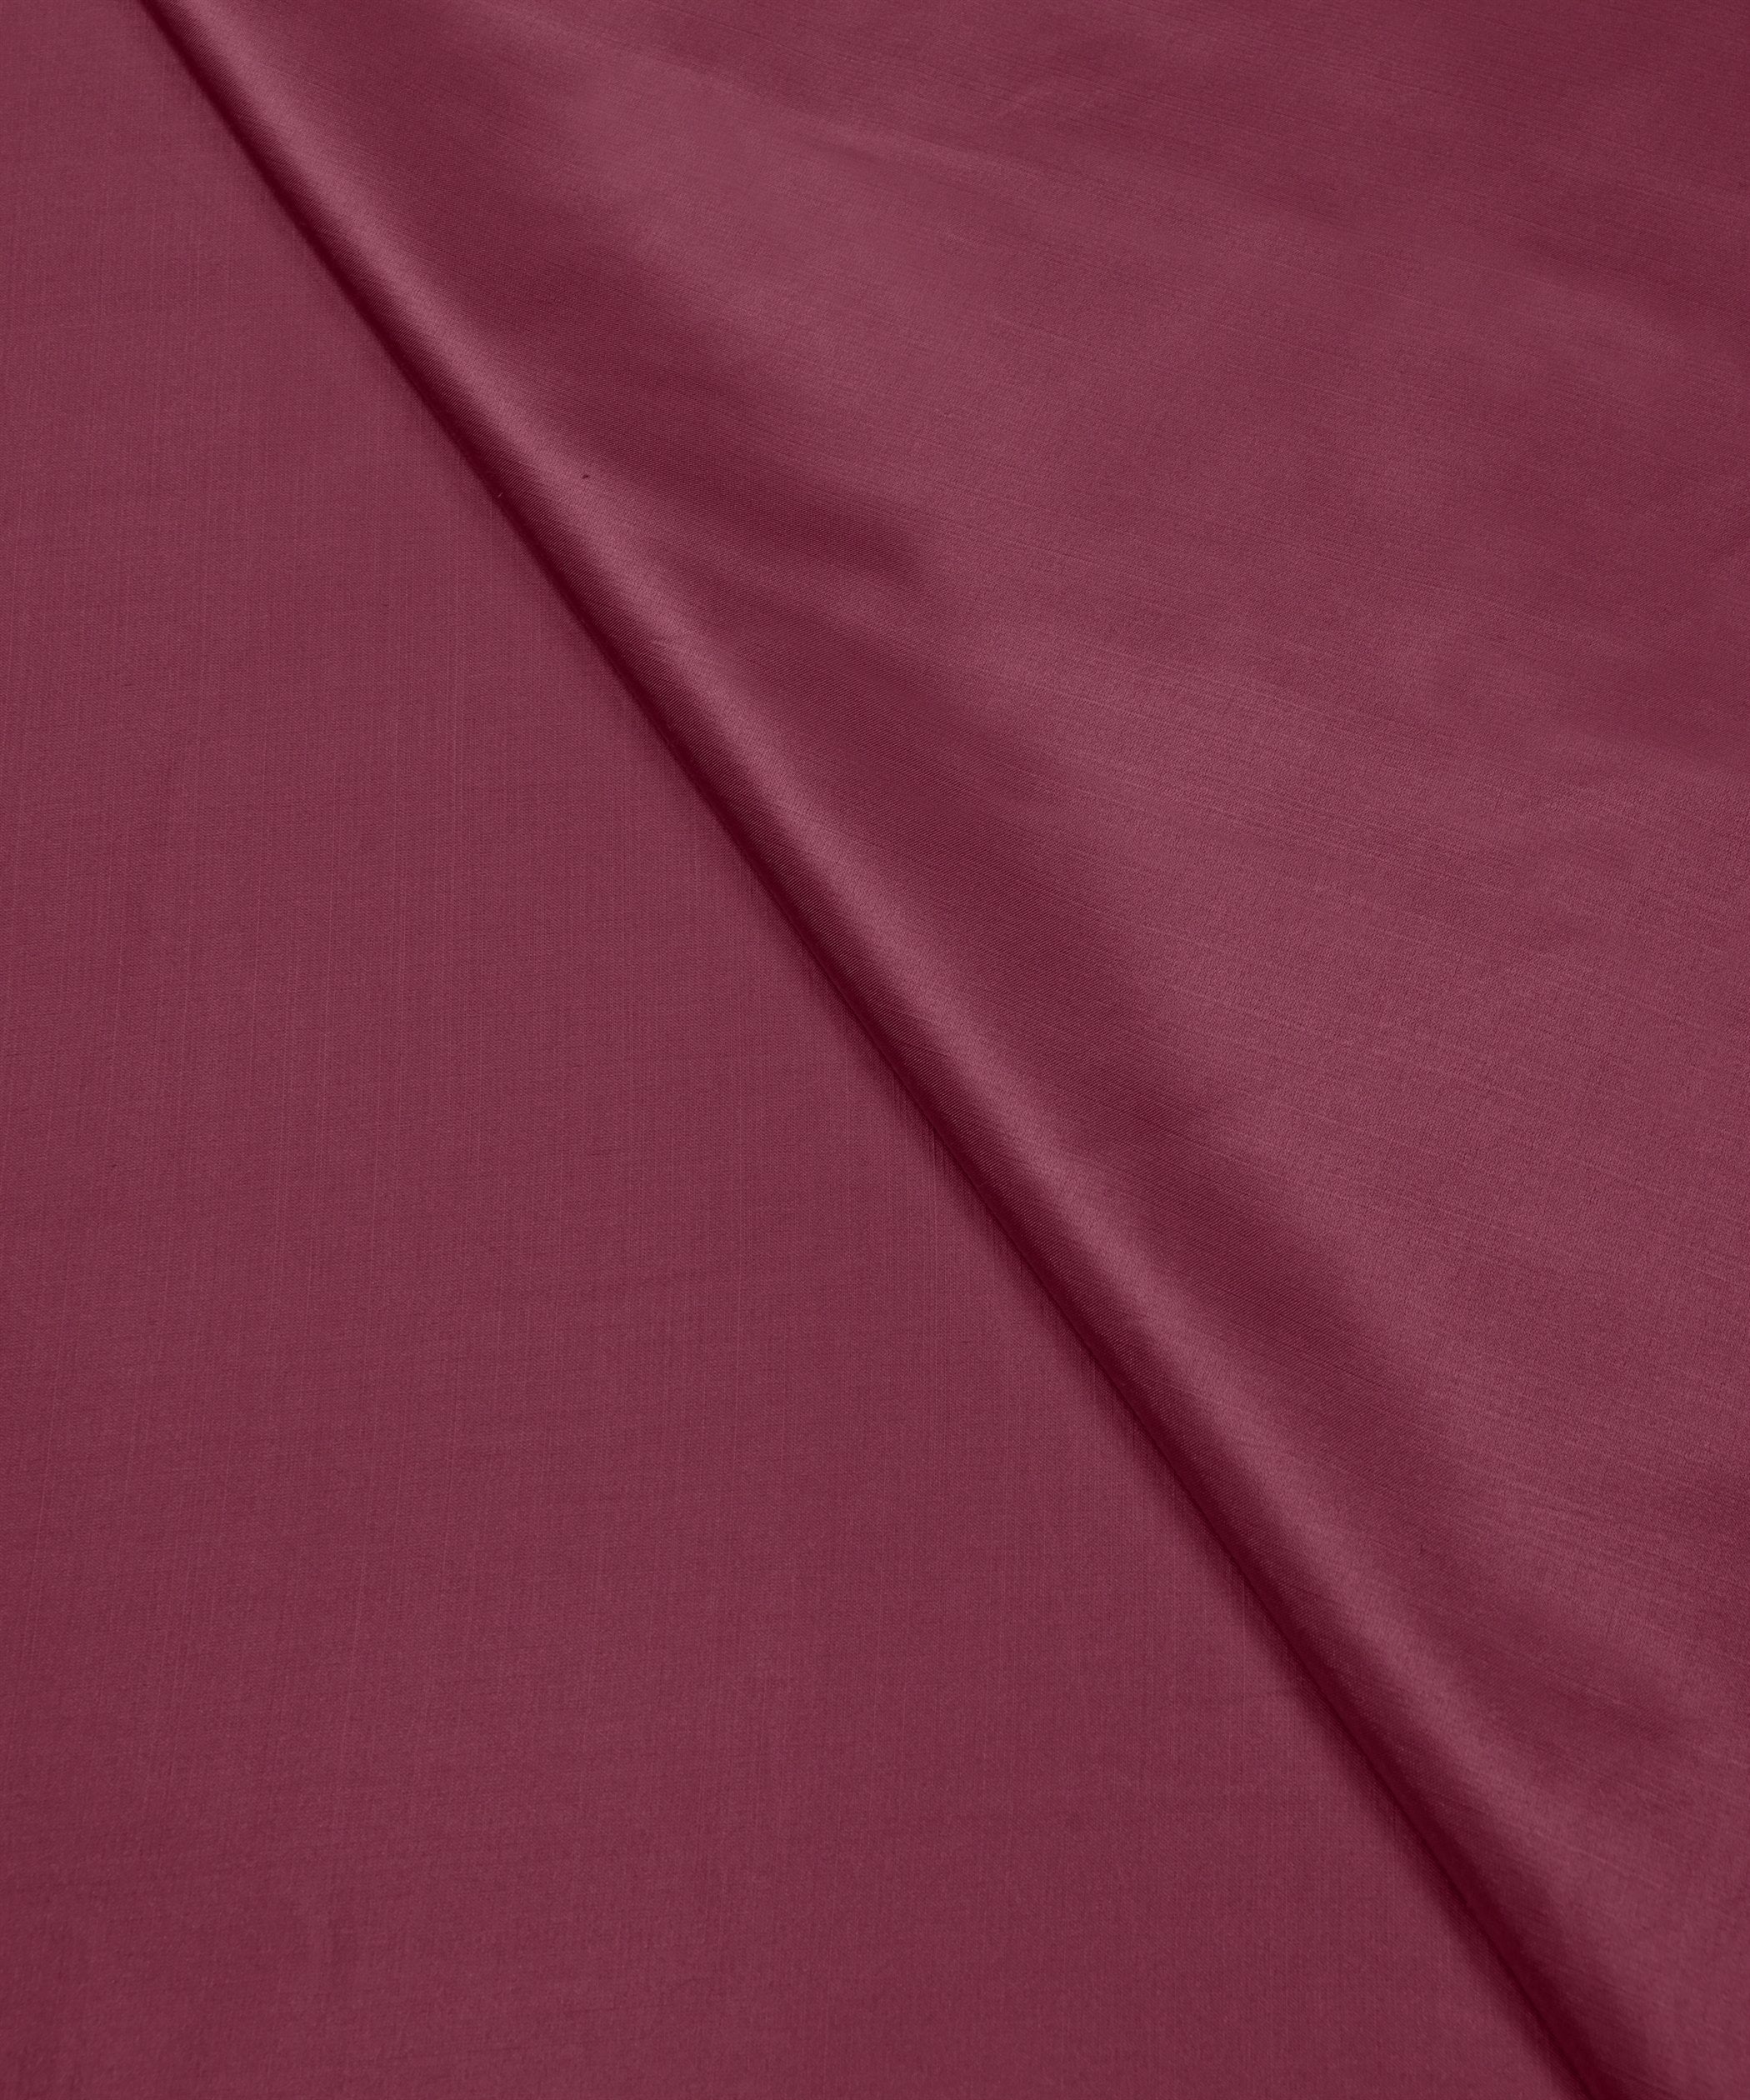 Glossy Maroon Plain Dyed Modal Satin Fabric